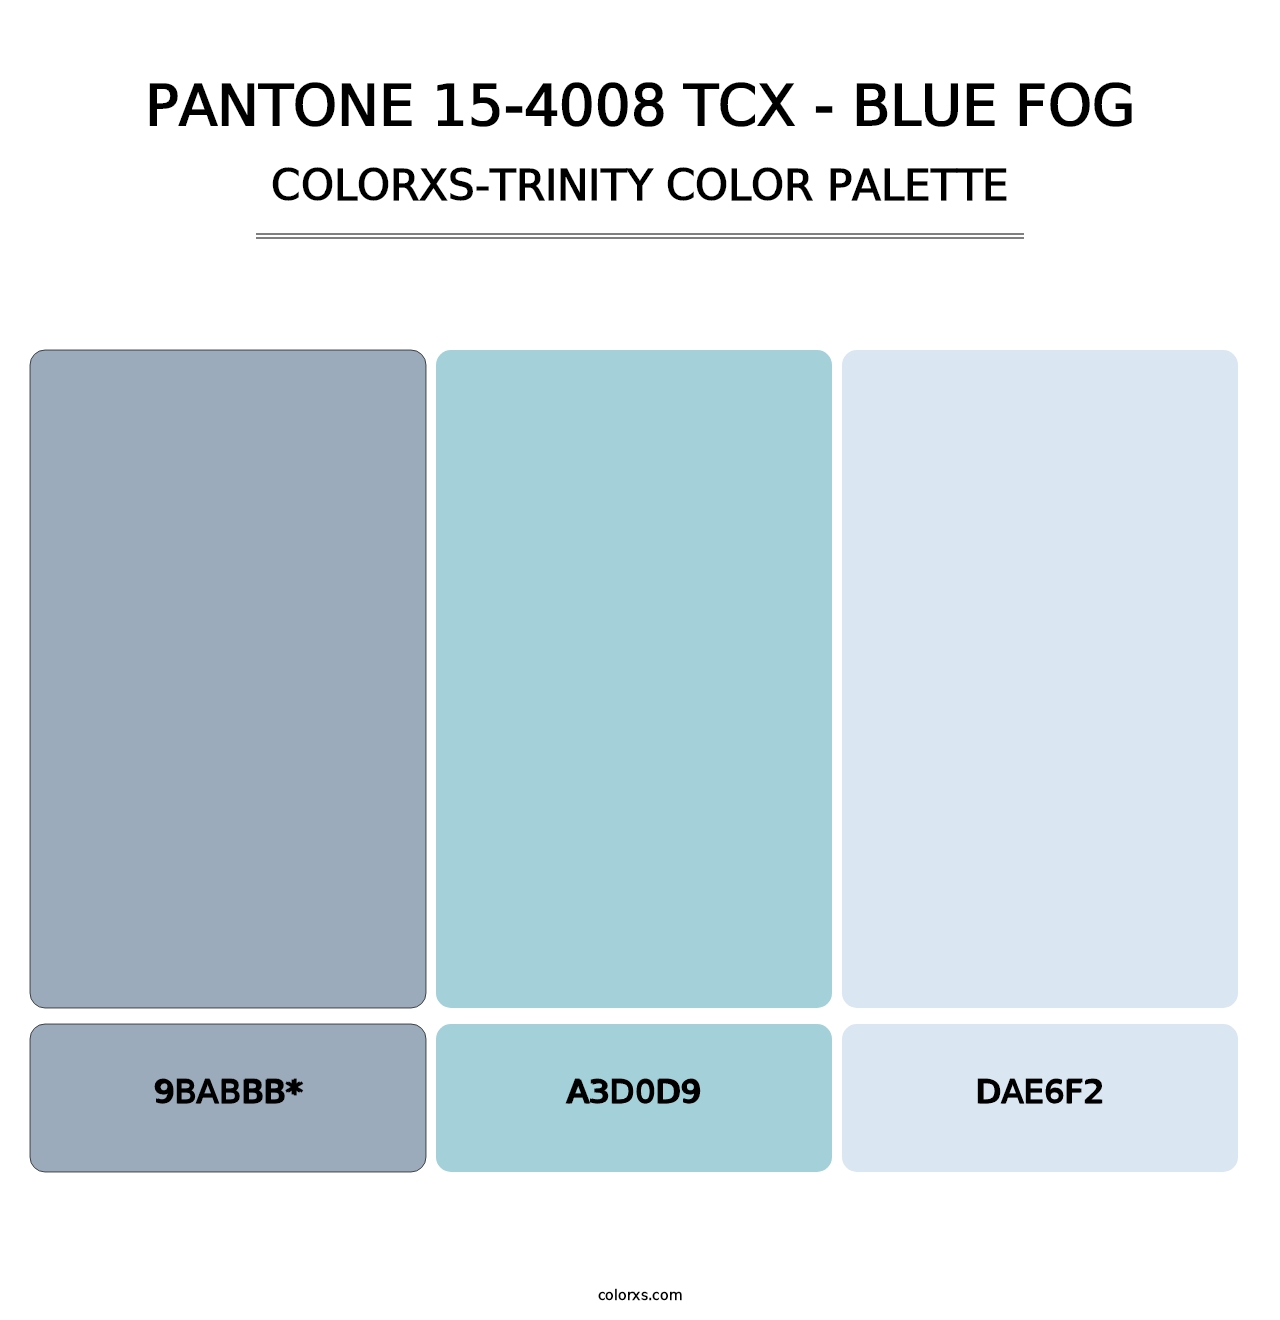 PANTONE 15-4008 TCX - Blue Fog - Colorxs Trinity Palette